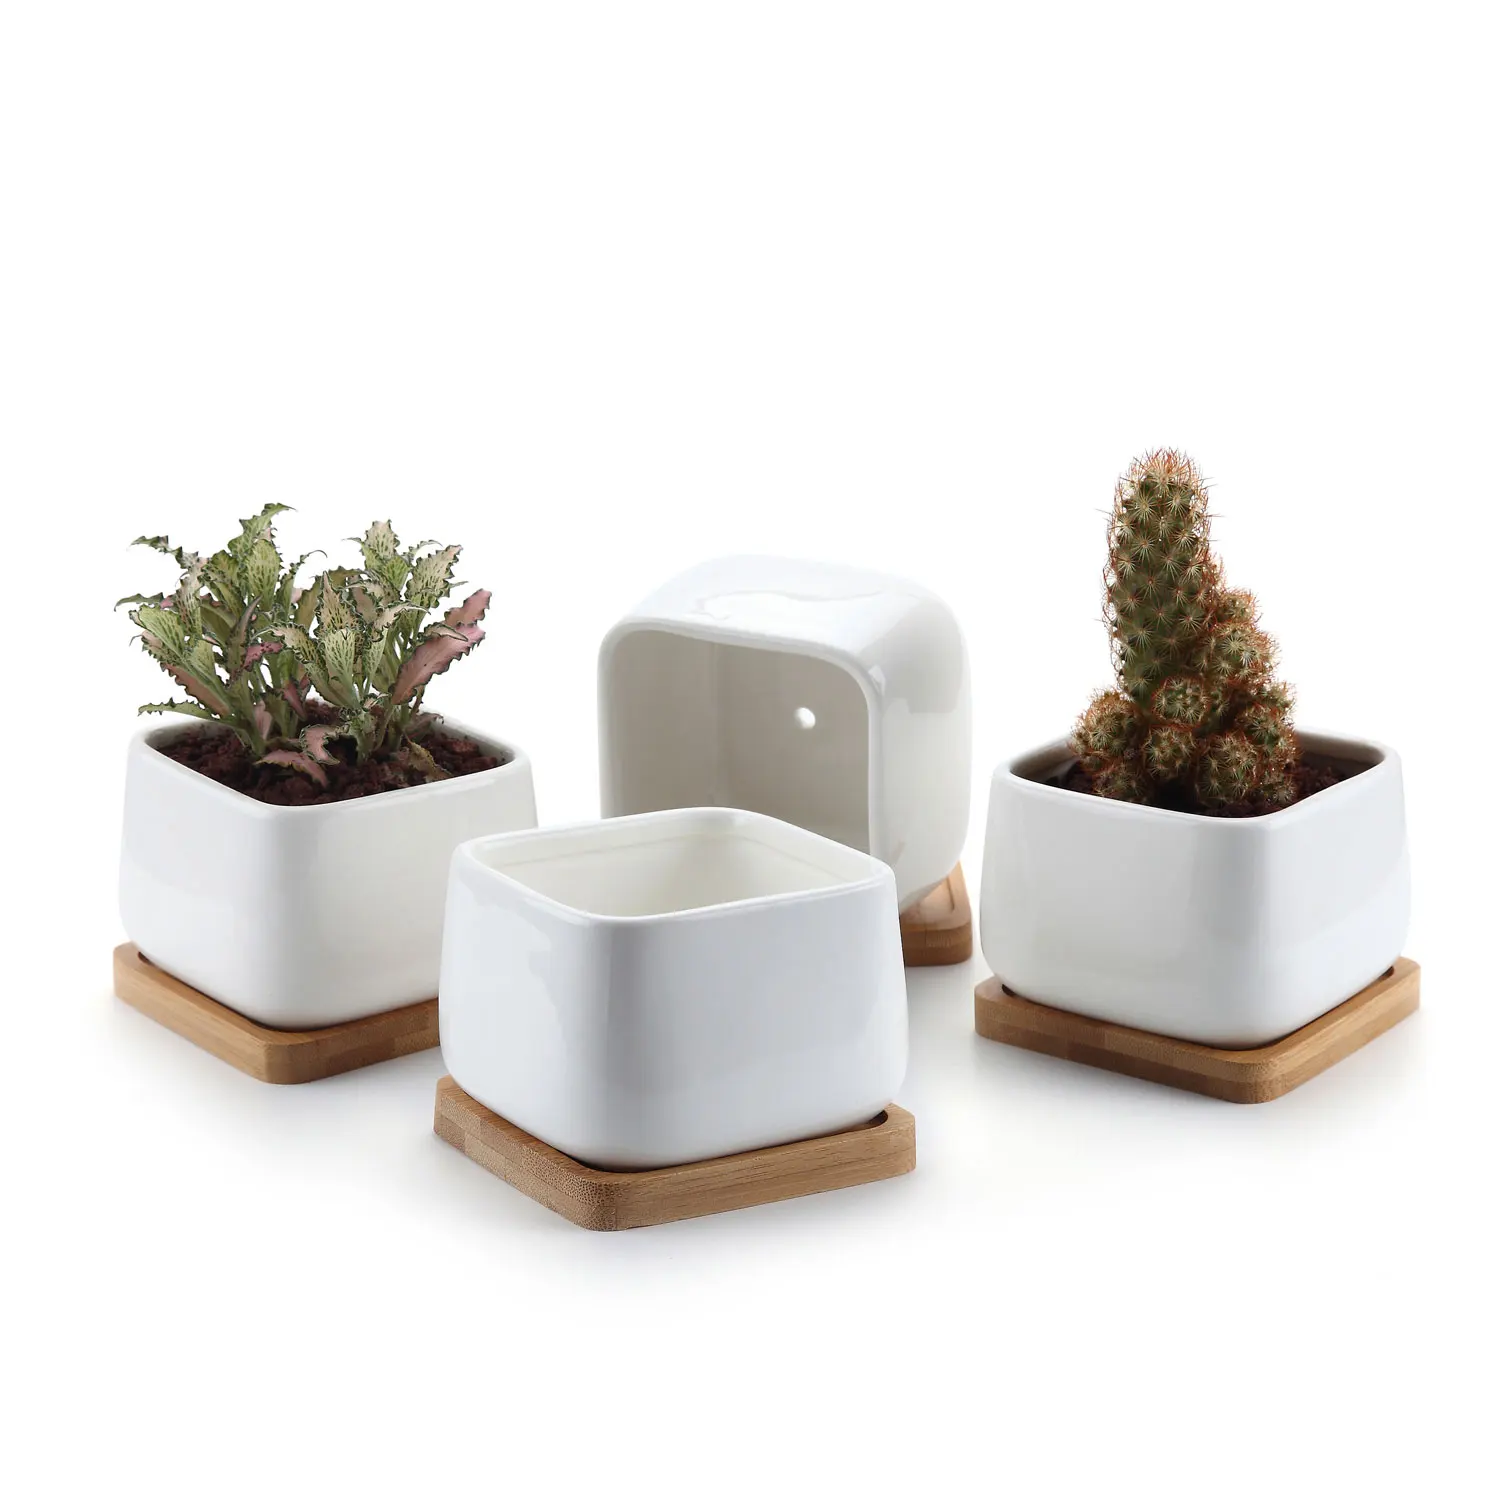 T4U 2 Inch Ceramic White Mini Square succulent Plant Pot/Cactus Plant Pot wit... 